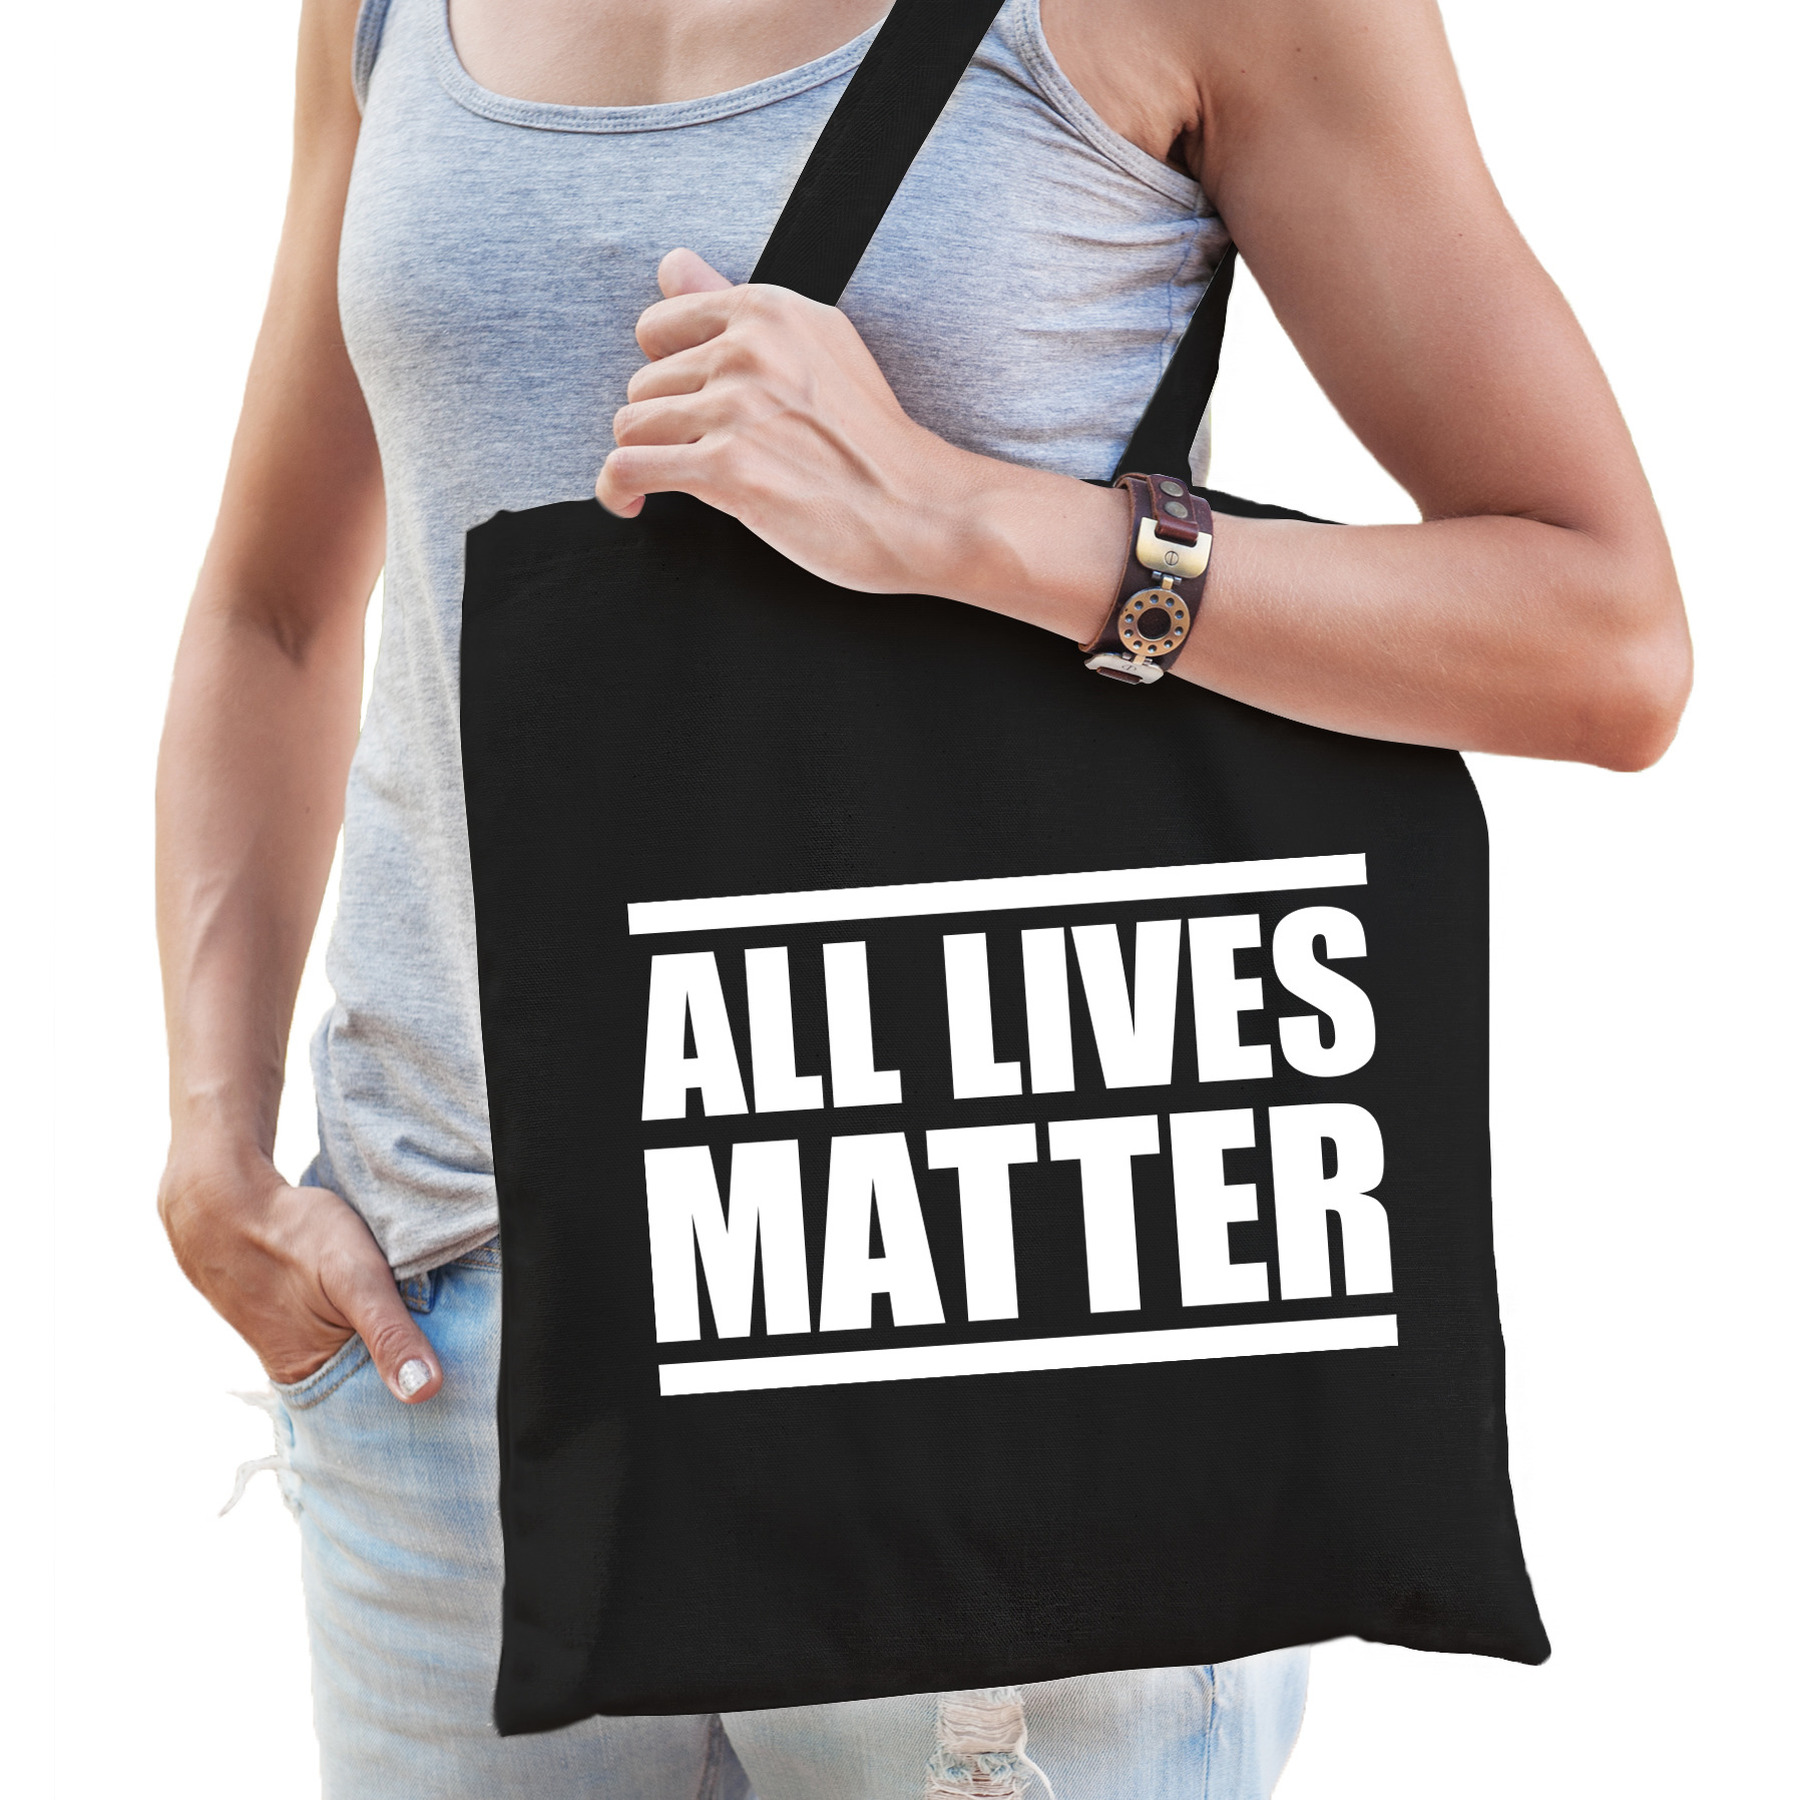 All lives matter protest tas zwart voor dames